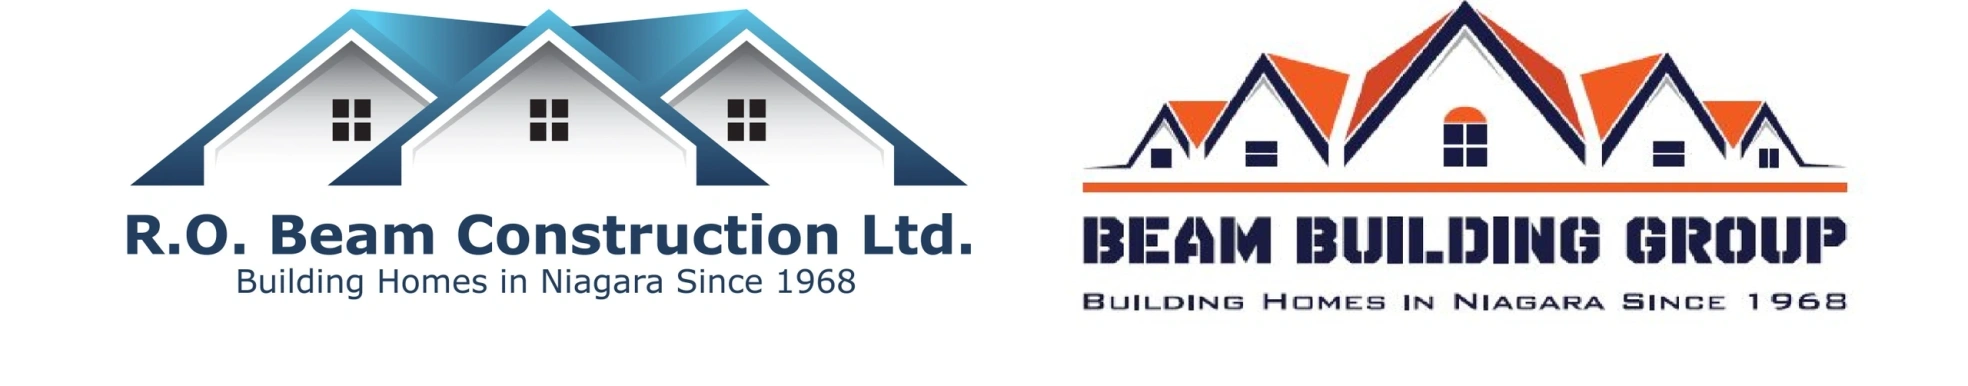 beam building logo